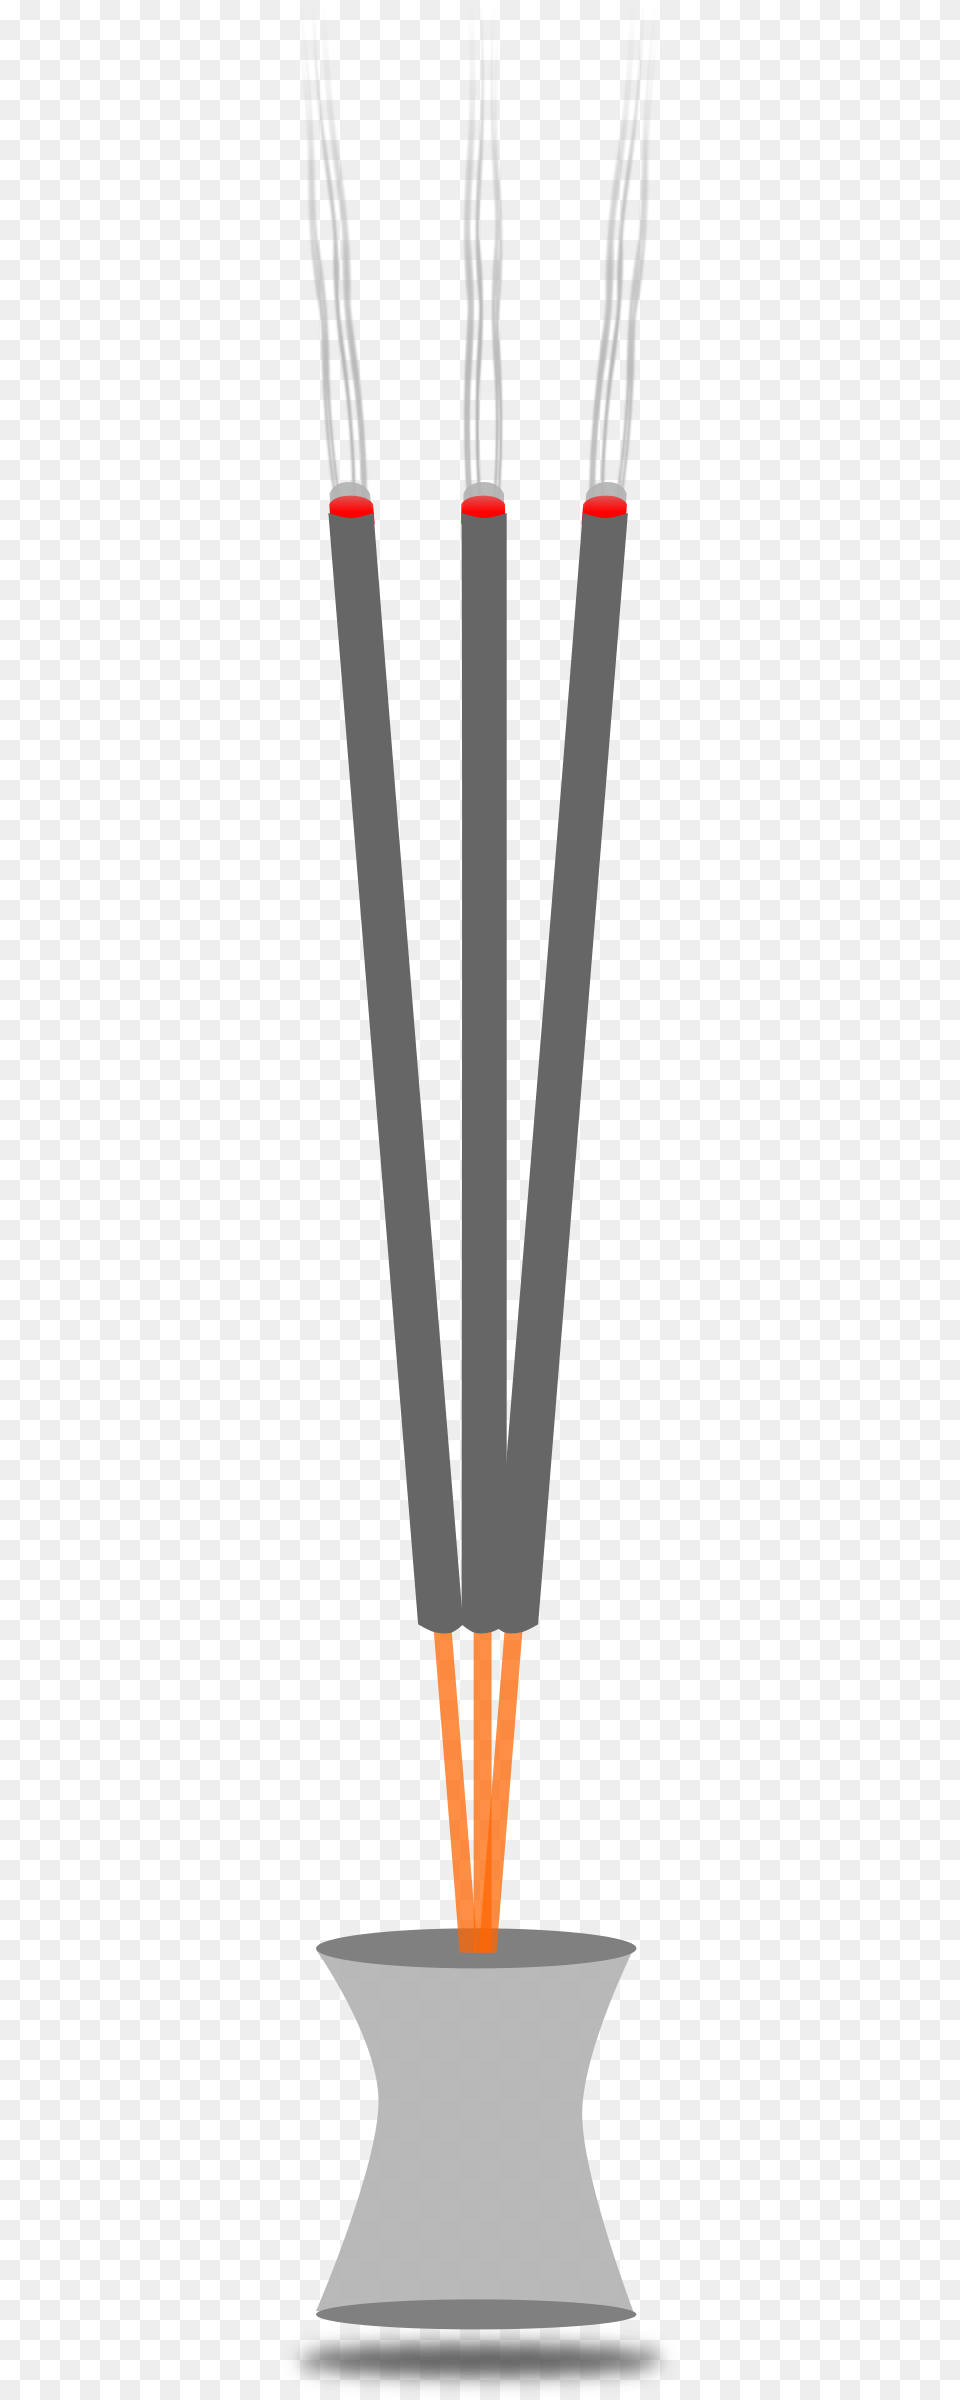 Incense Stick Png Image